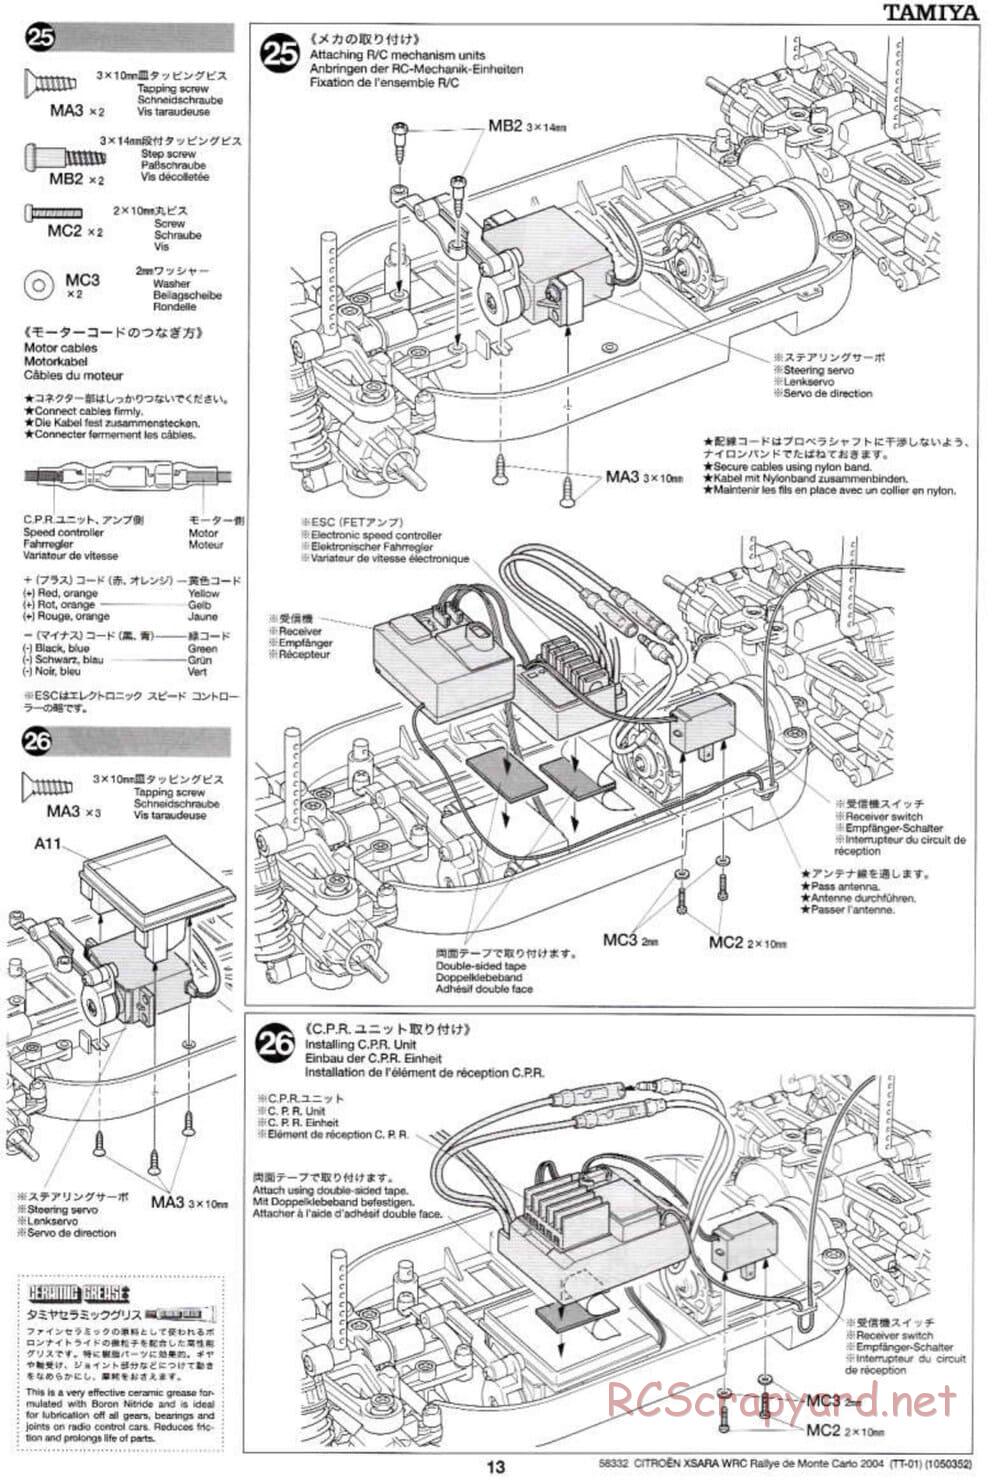 Tamiya - Citroen Xsara WRC Rallye De Monte Carlo 2004 - TT-01 Chassis - Manual - Page 13